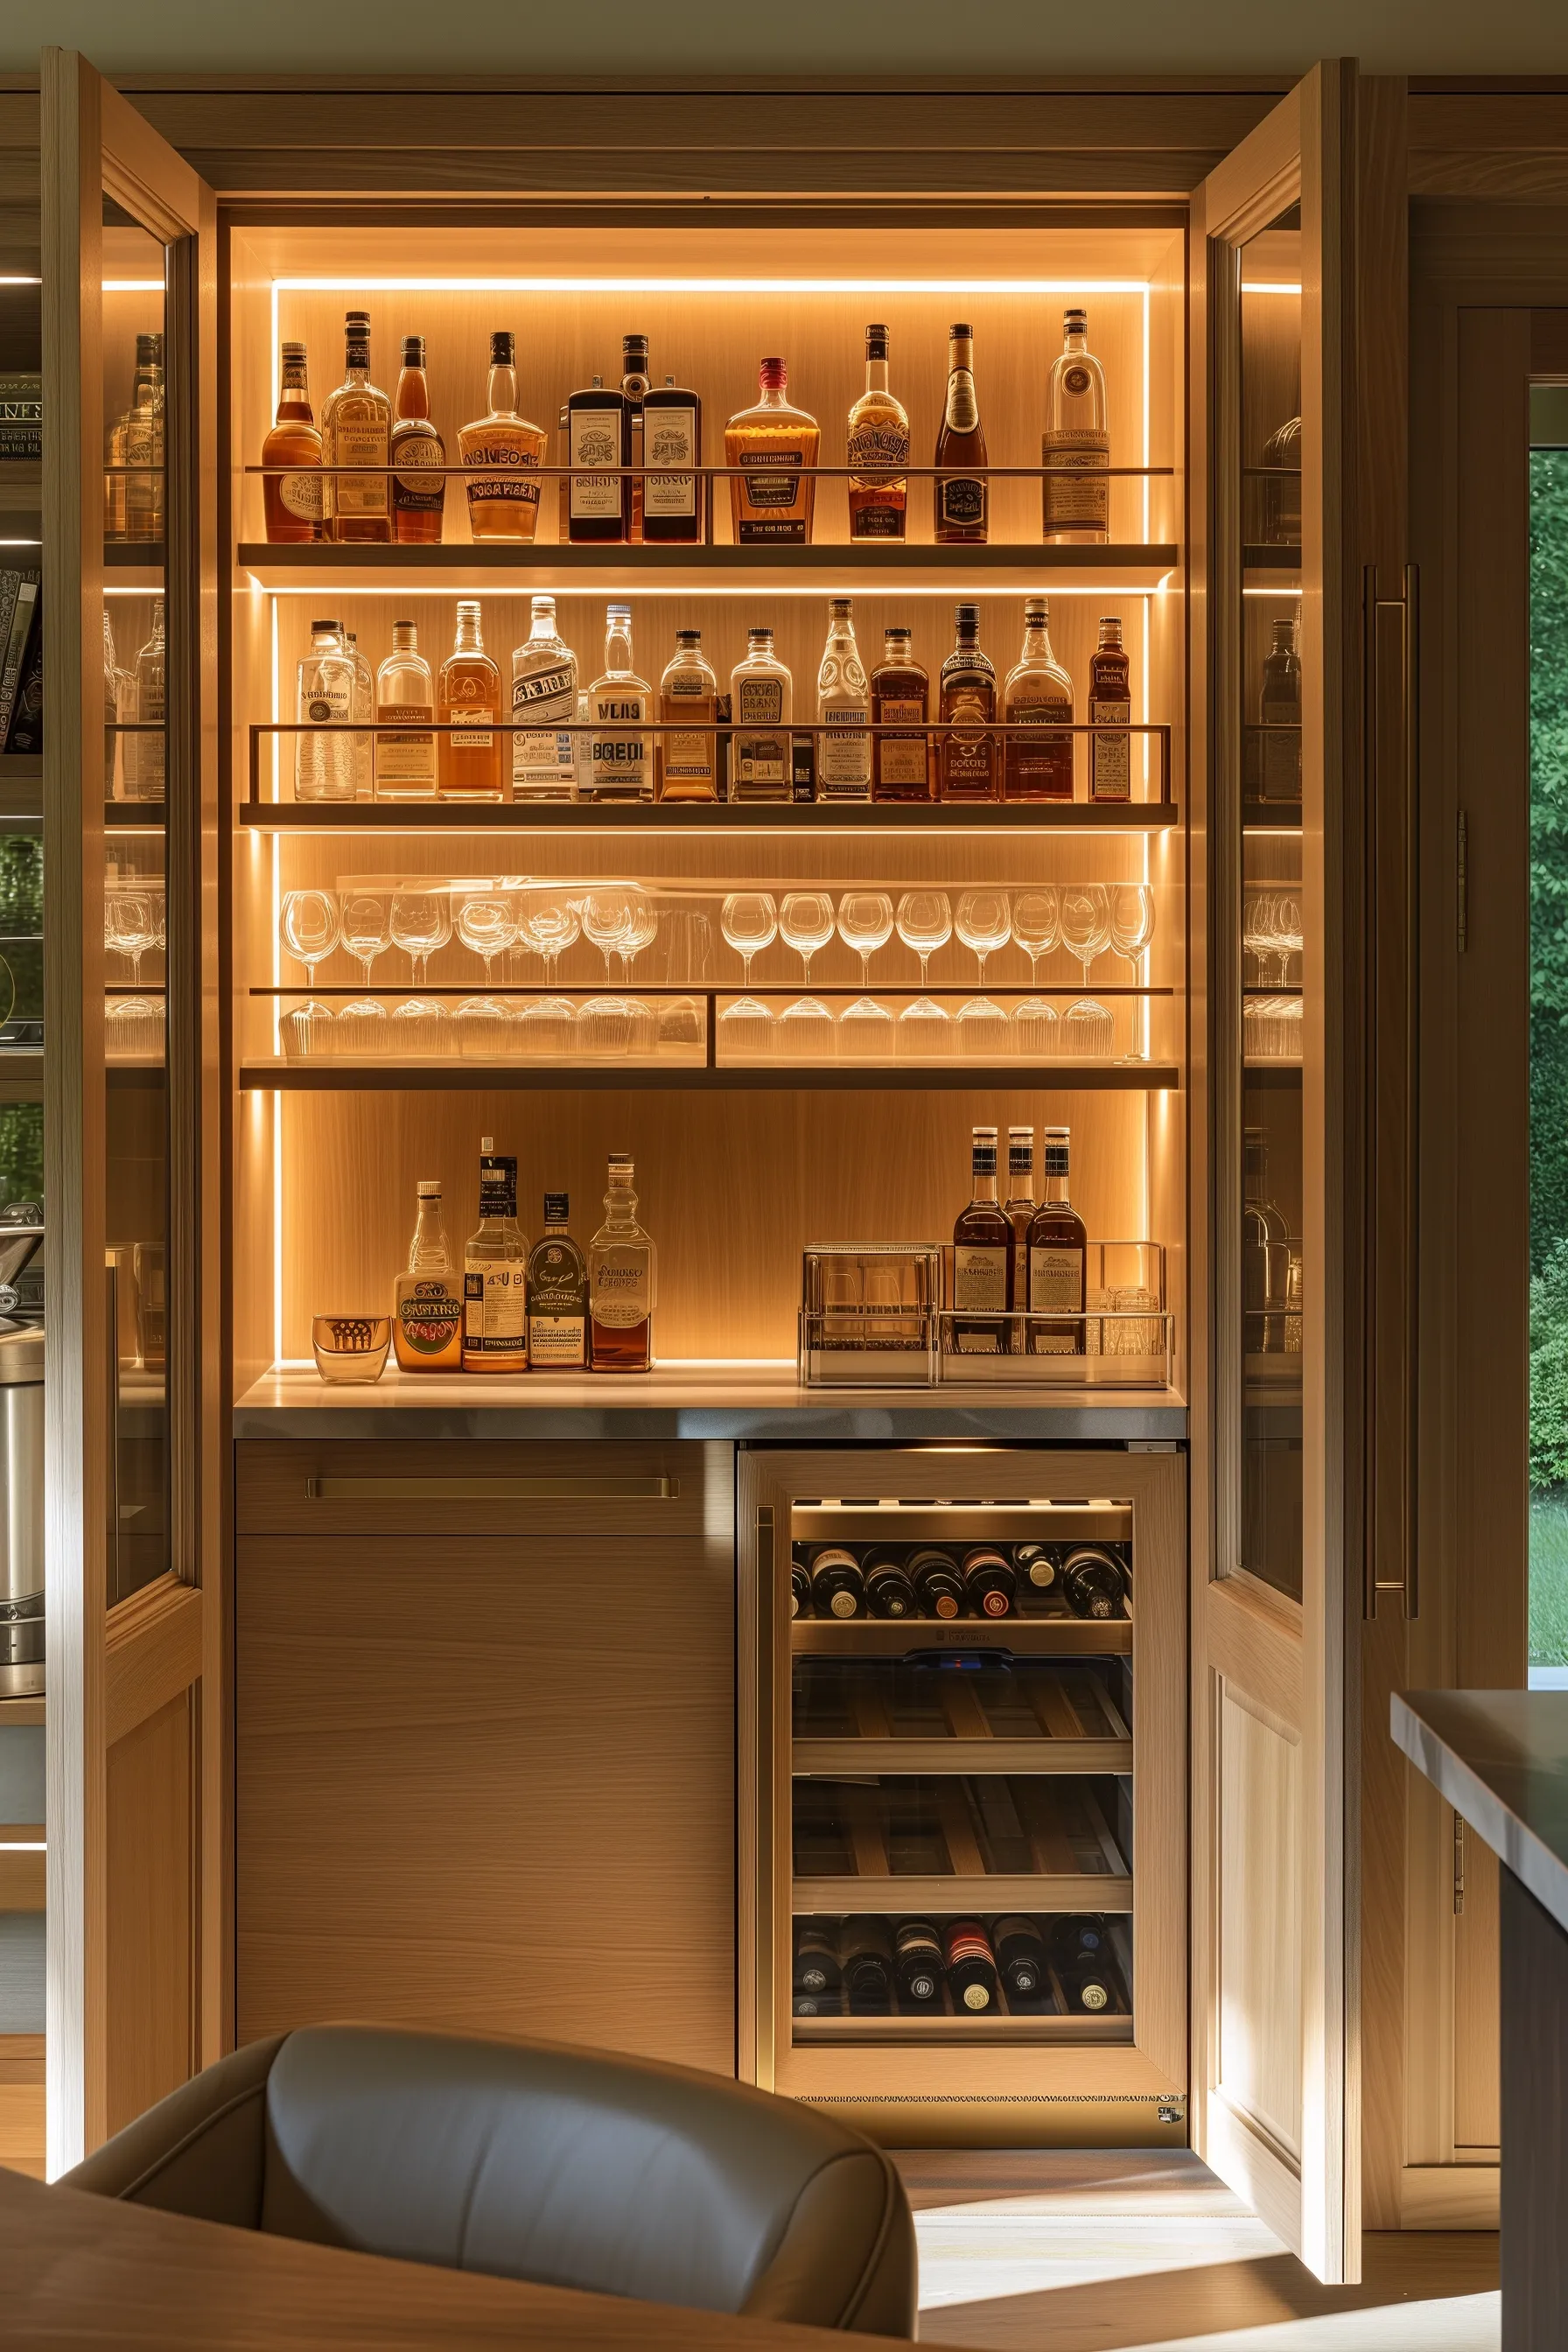 A wooden bar shelf with hidden storage